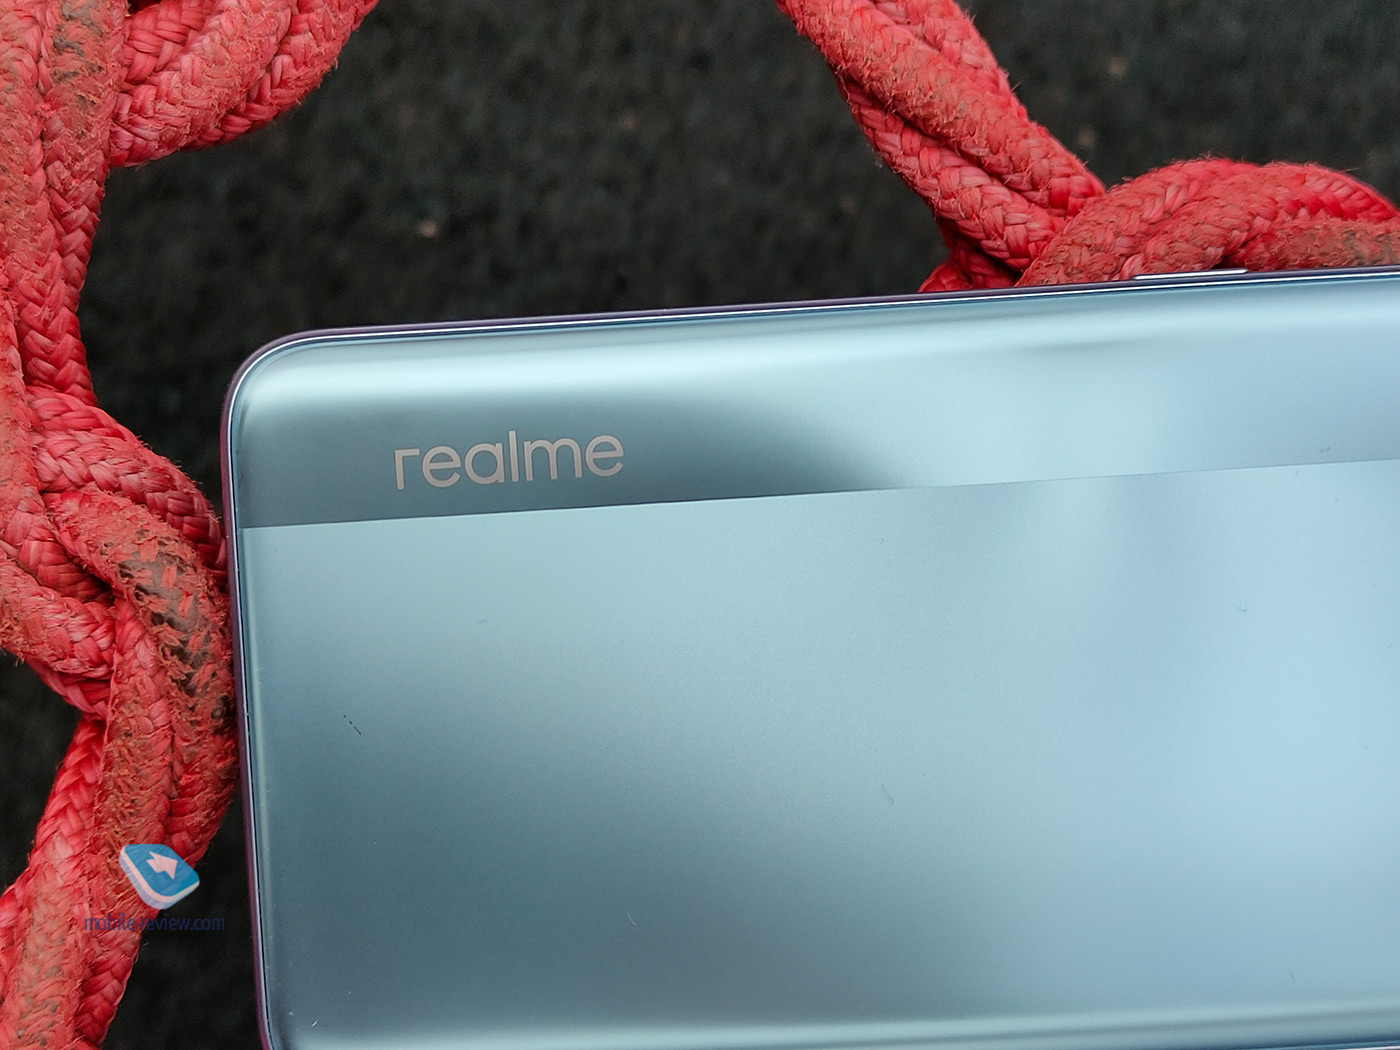 Smartphone review realme 7 Pro (RMX2170)